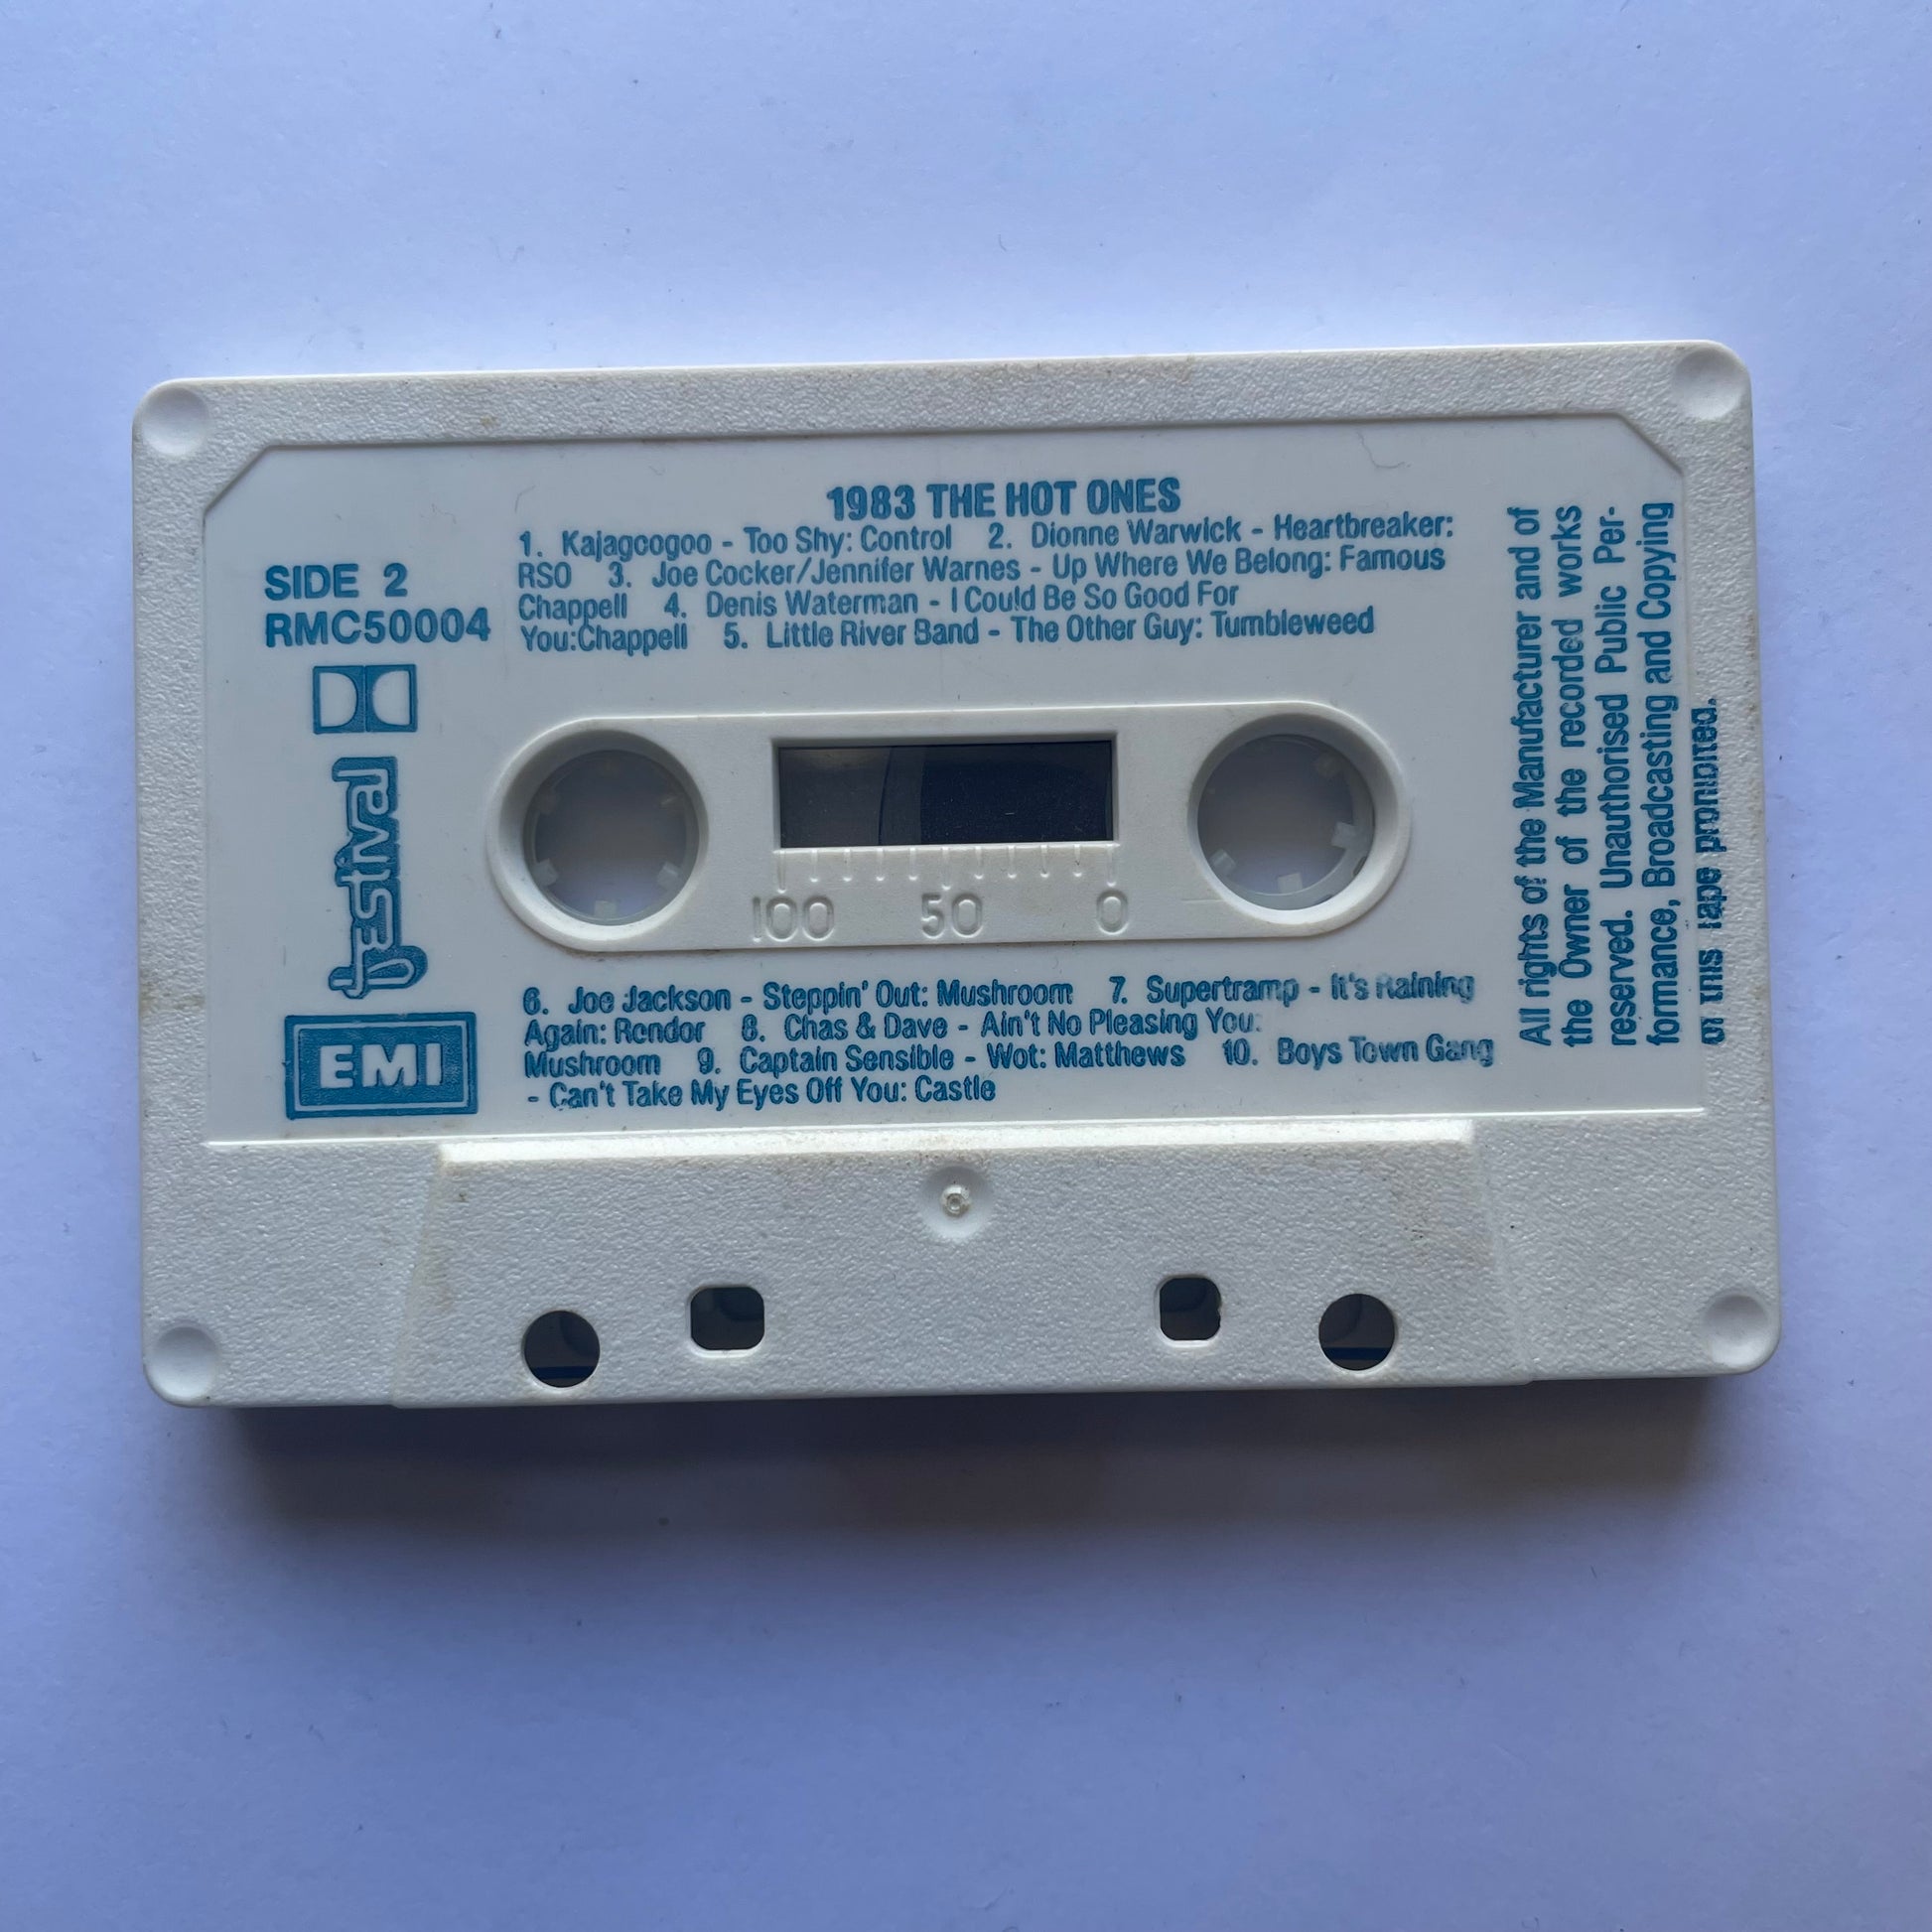 Tape  Cassette the hot ones 1983 side 2 